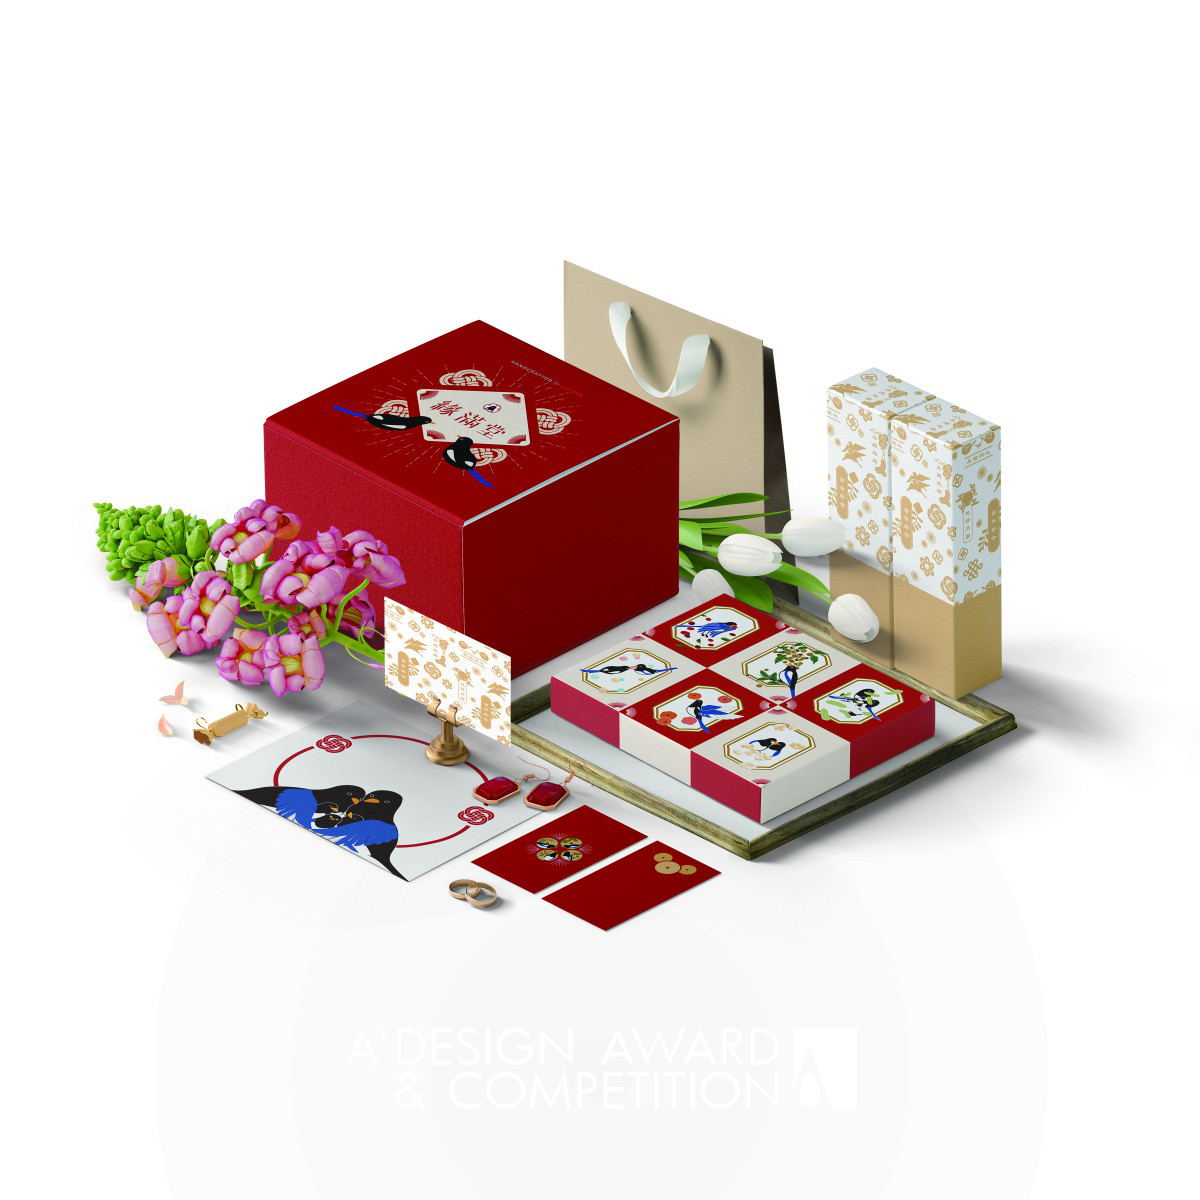 Serendipity Hall Gift Box by Wen Xuan Zhang